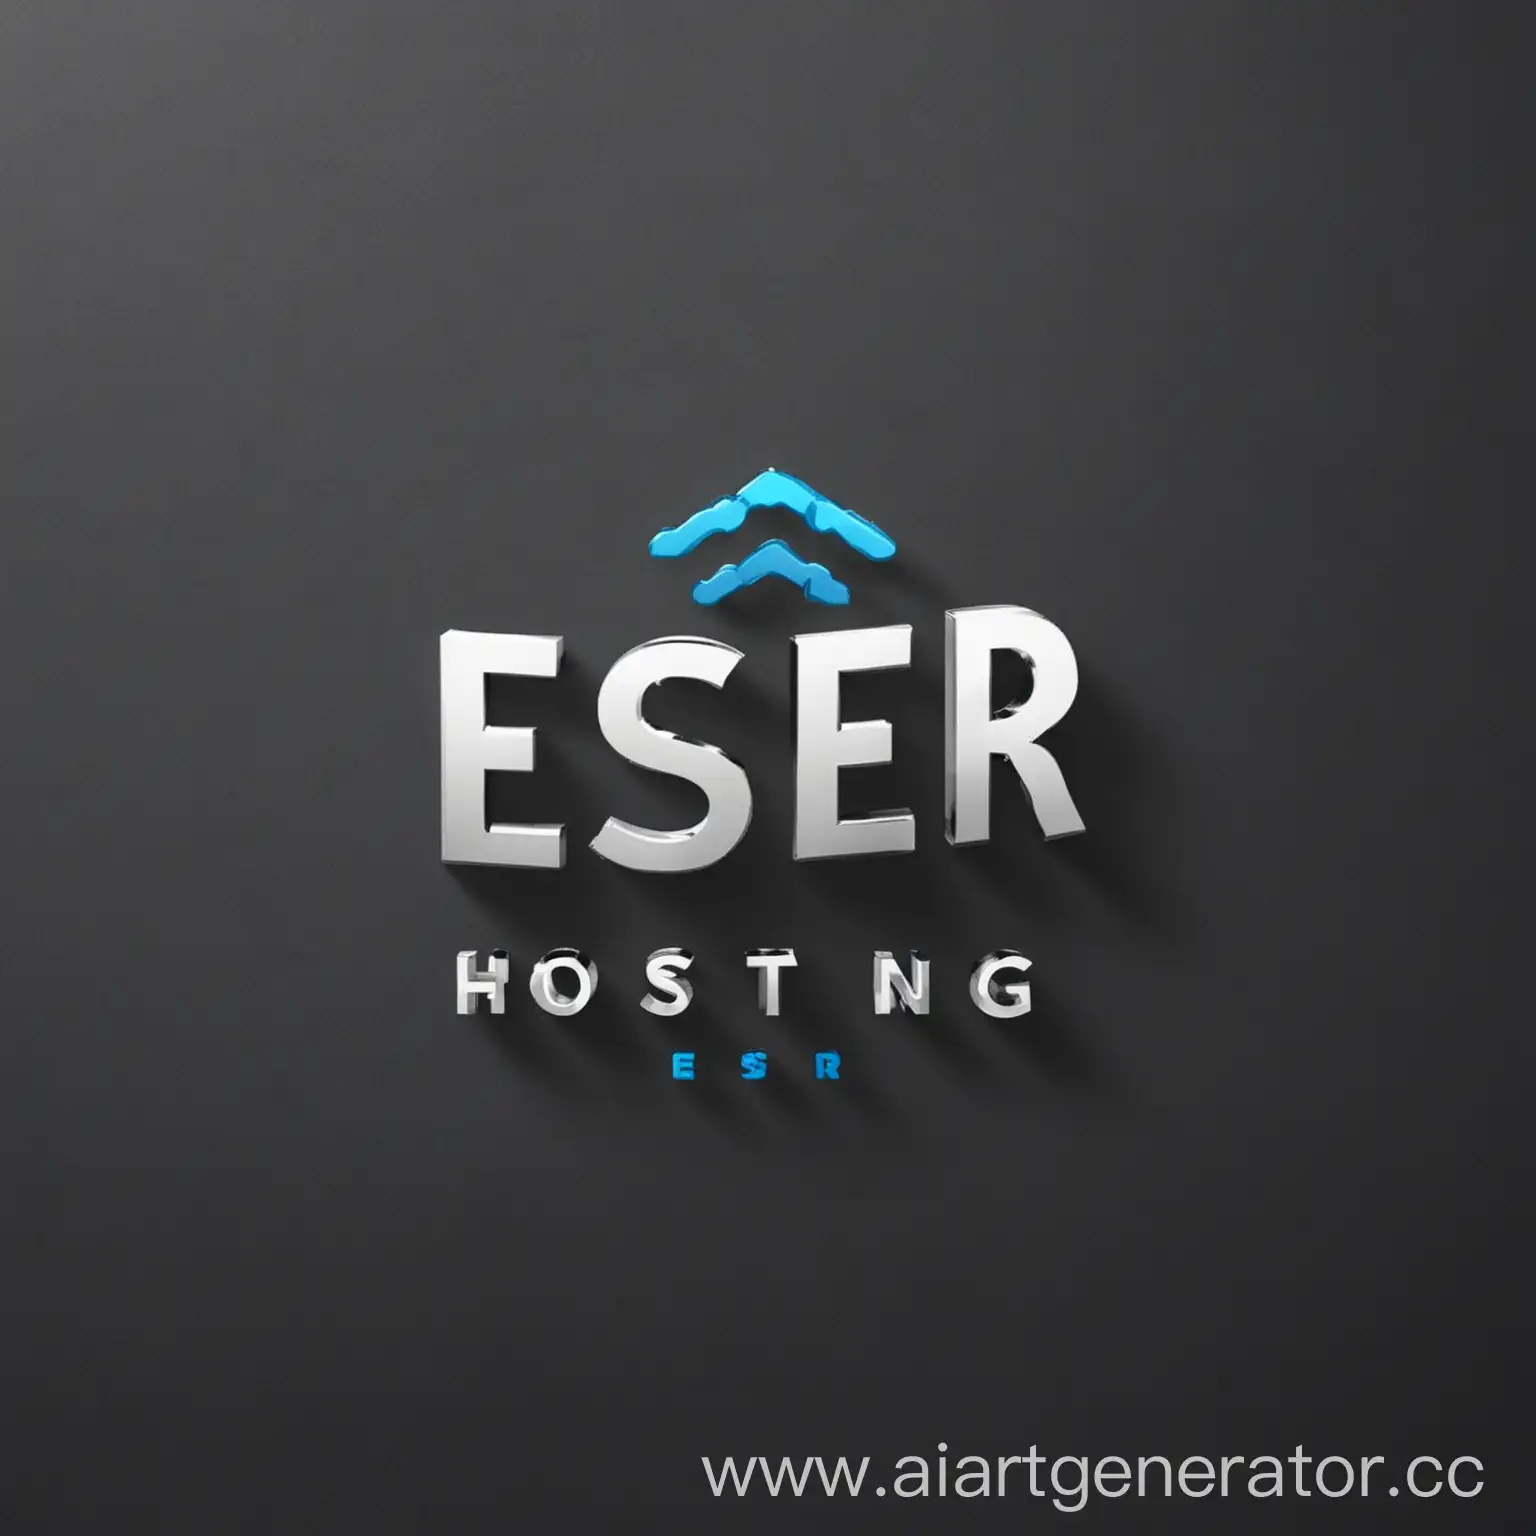 Creative-Logo-Design-for-Eser-Hosting-Dynamic-Integration-of-Letterforms-and-Tech-Elements